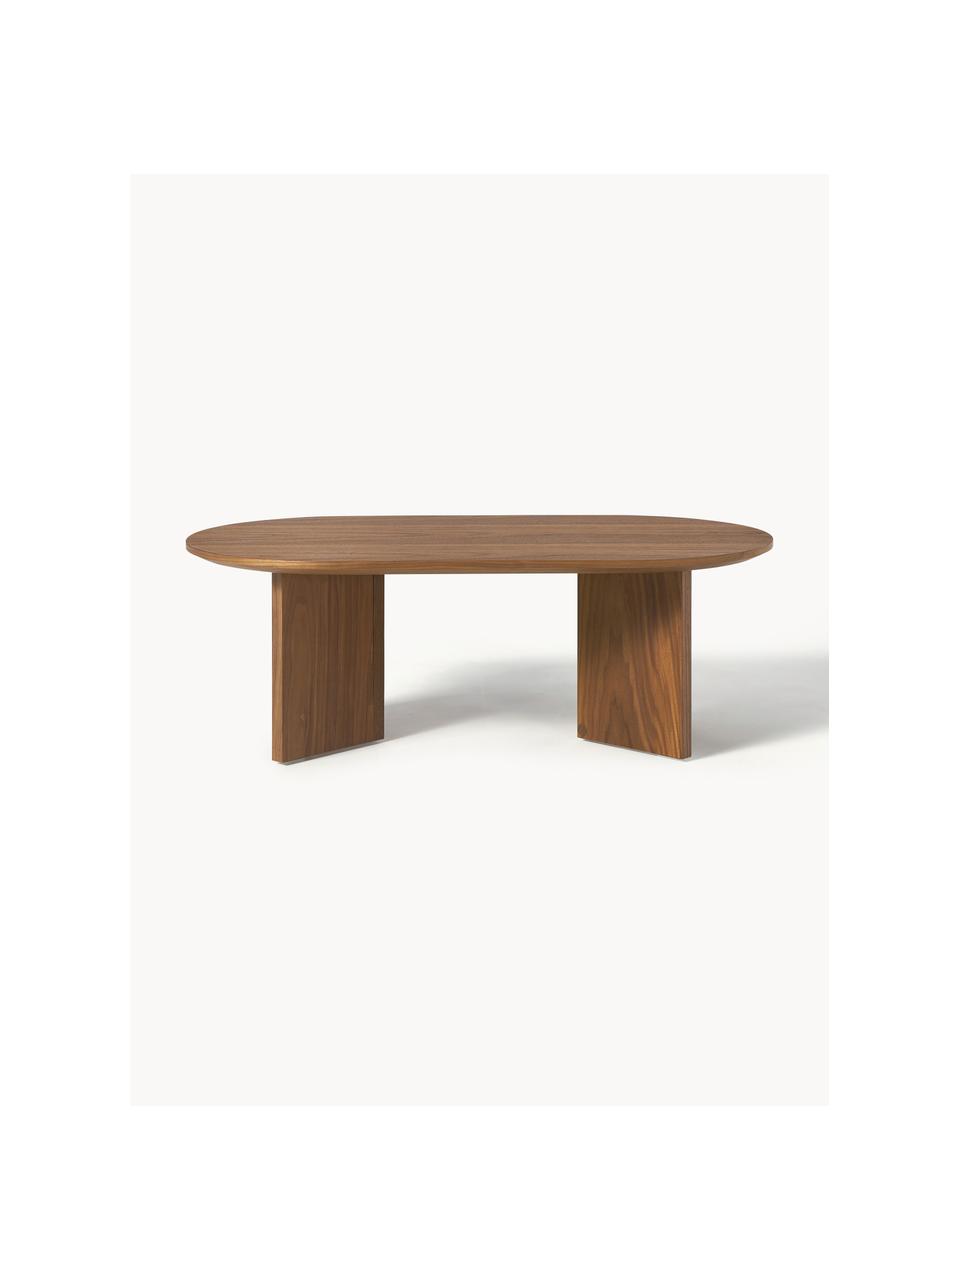 Table basse ovale en bois Toni, MDF avec placage en bois de noyer, laqué, Bois de noyer, Ø 100 x haut. 55 cm